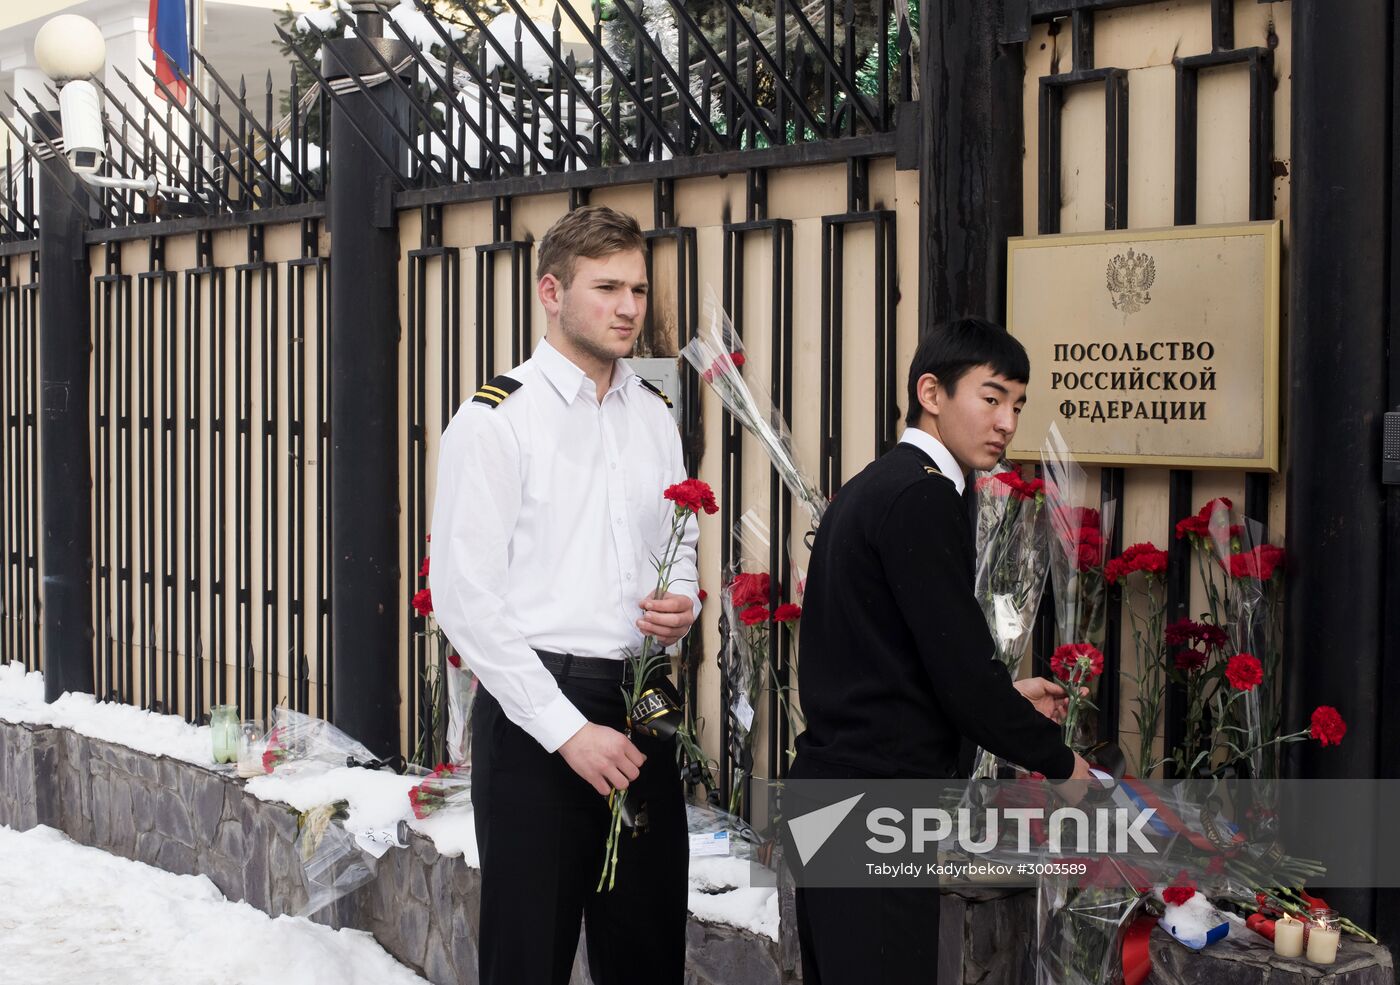 Flowers at Russian embassy in Kyrgyzstan honoring victims of Tu-154 crash in Sochi